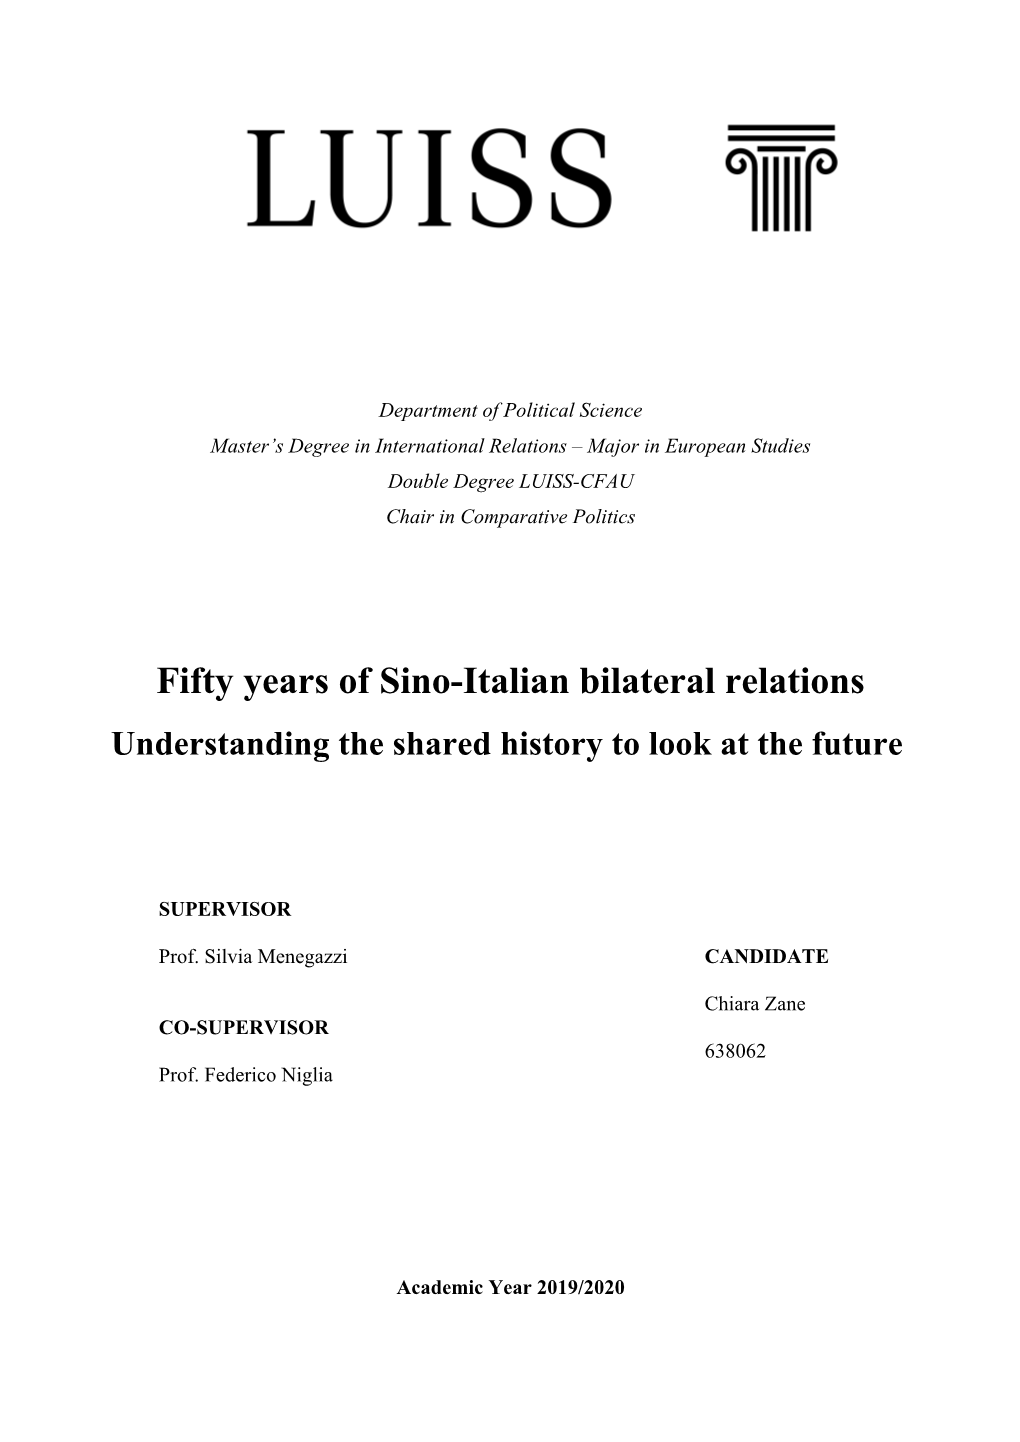 Fifty Years of Sino-Italian Bilateral Relations